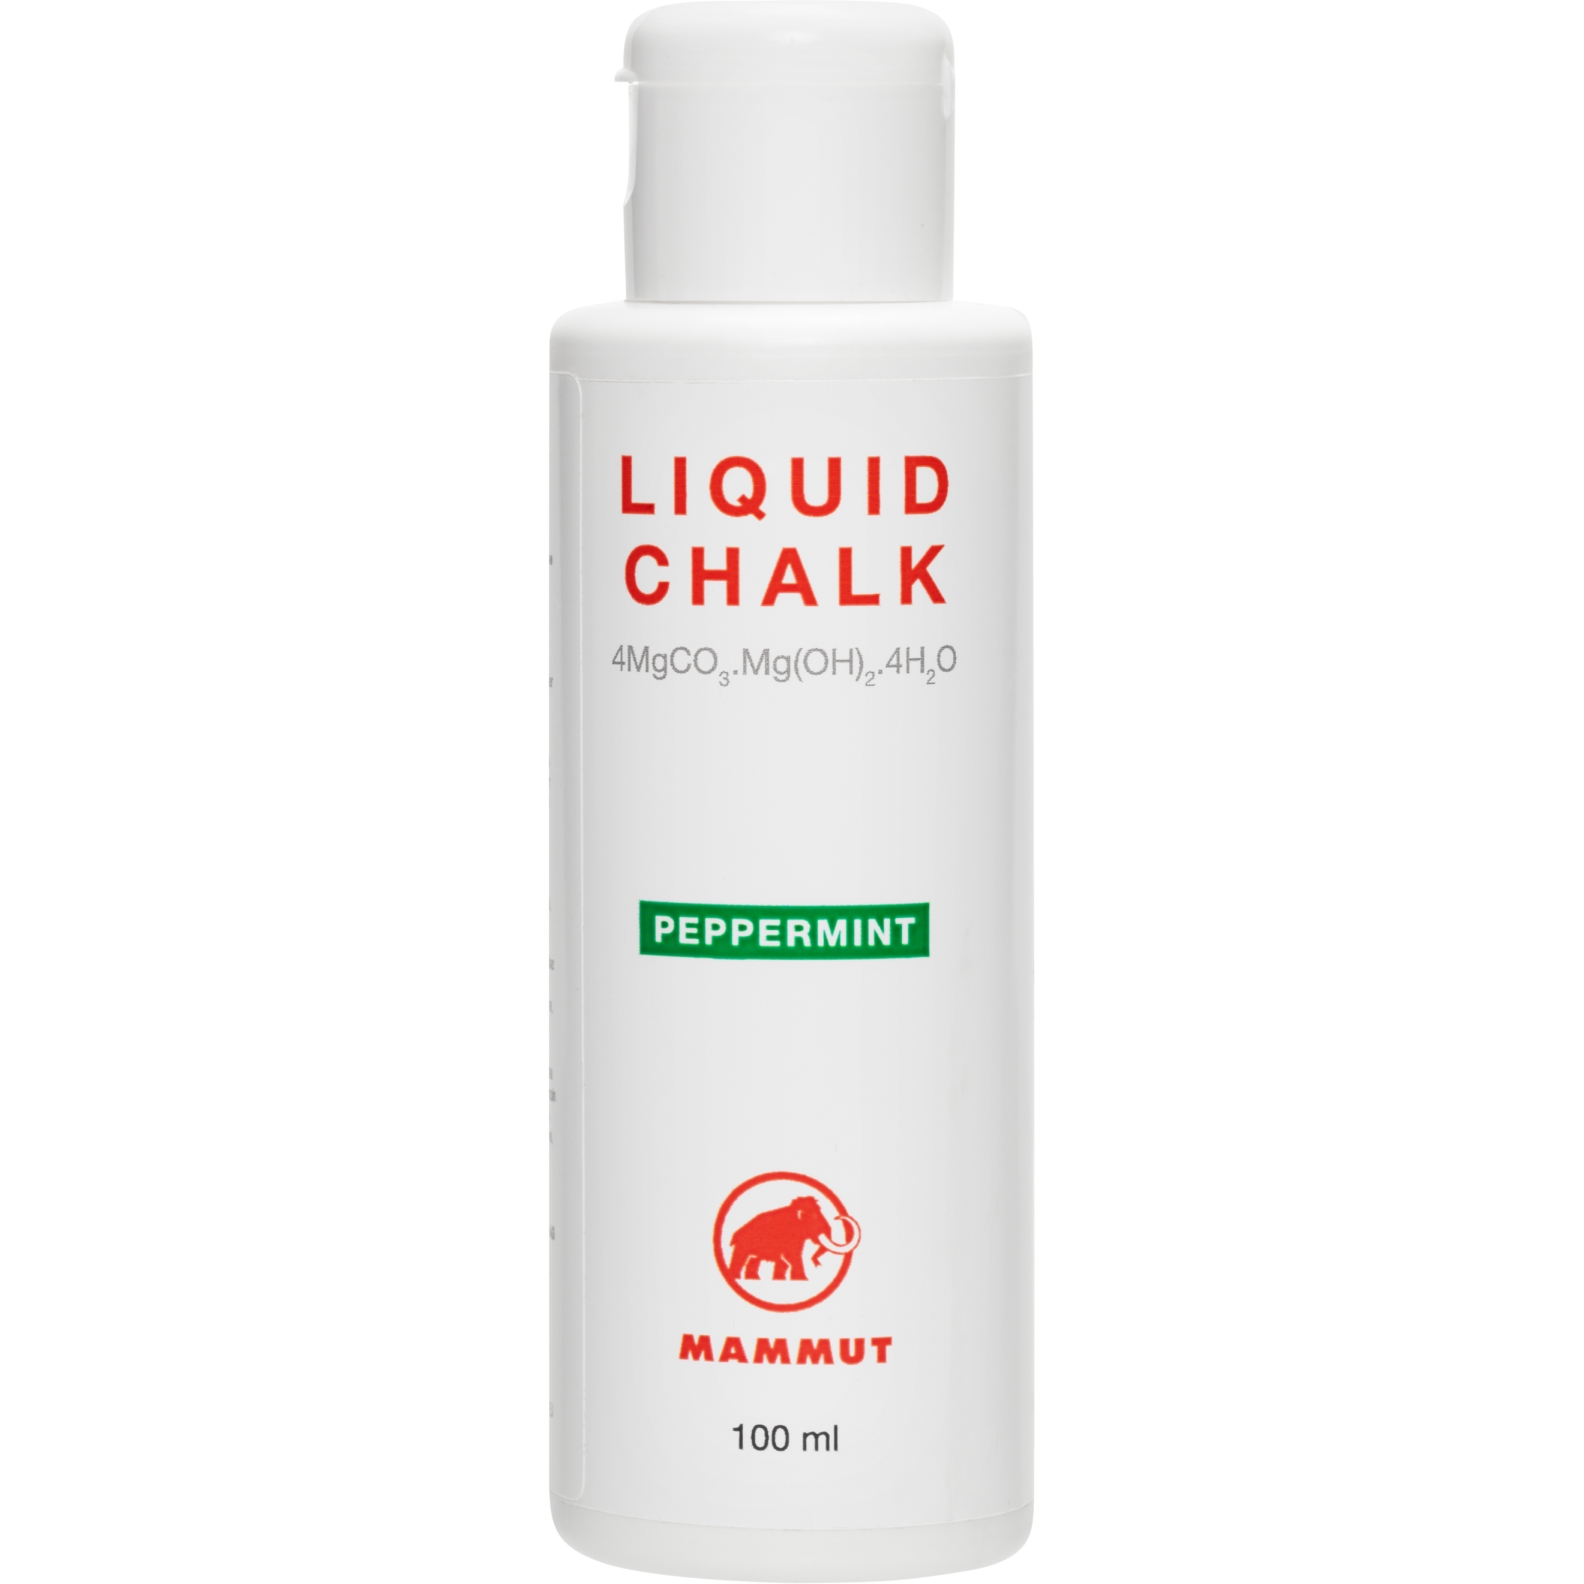 Image of Mammut Liquid Chalk Peppermint 100ml